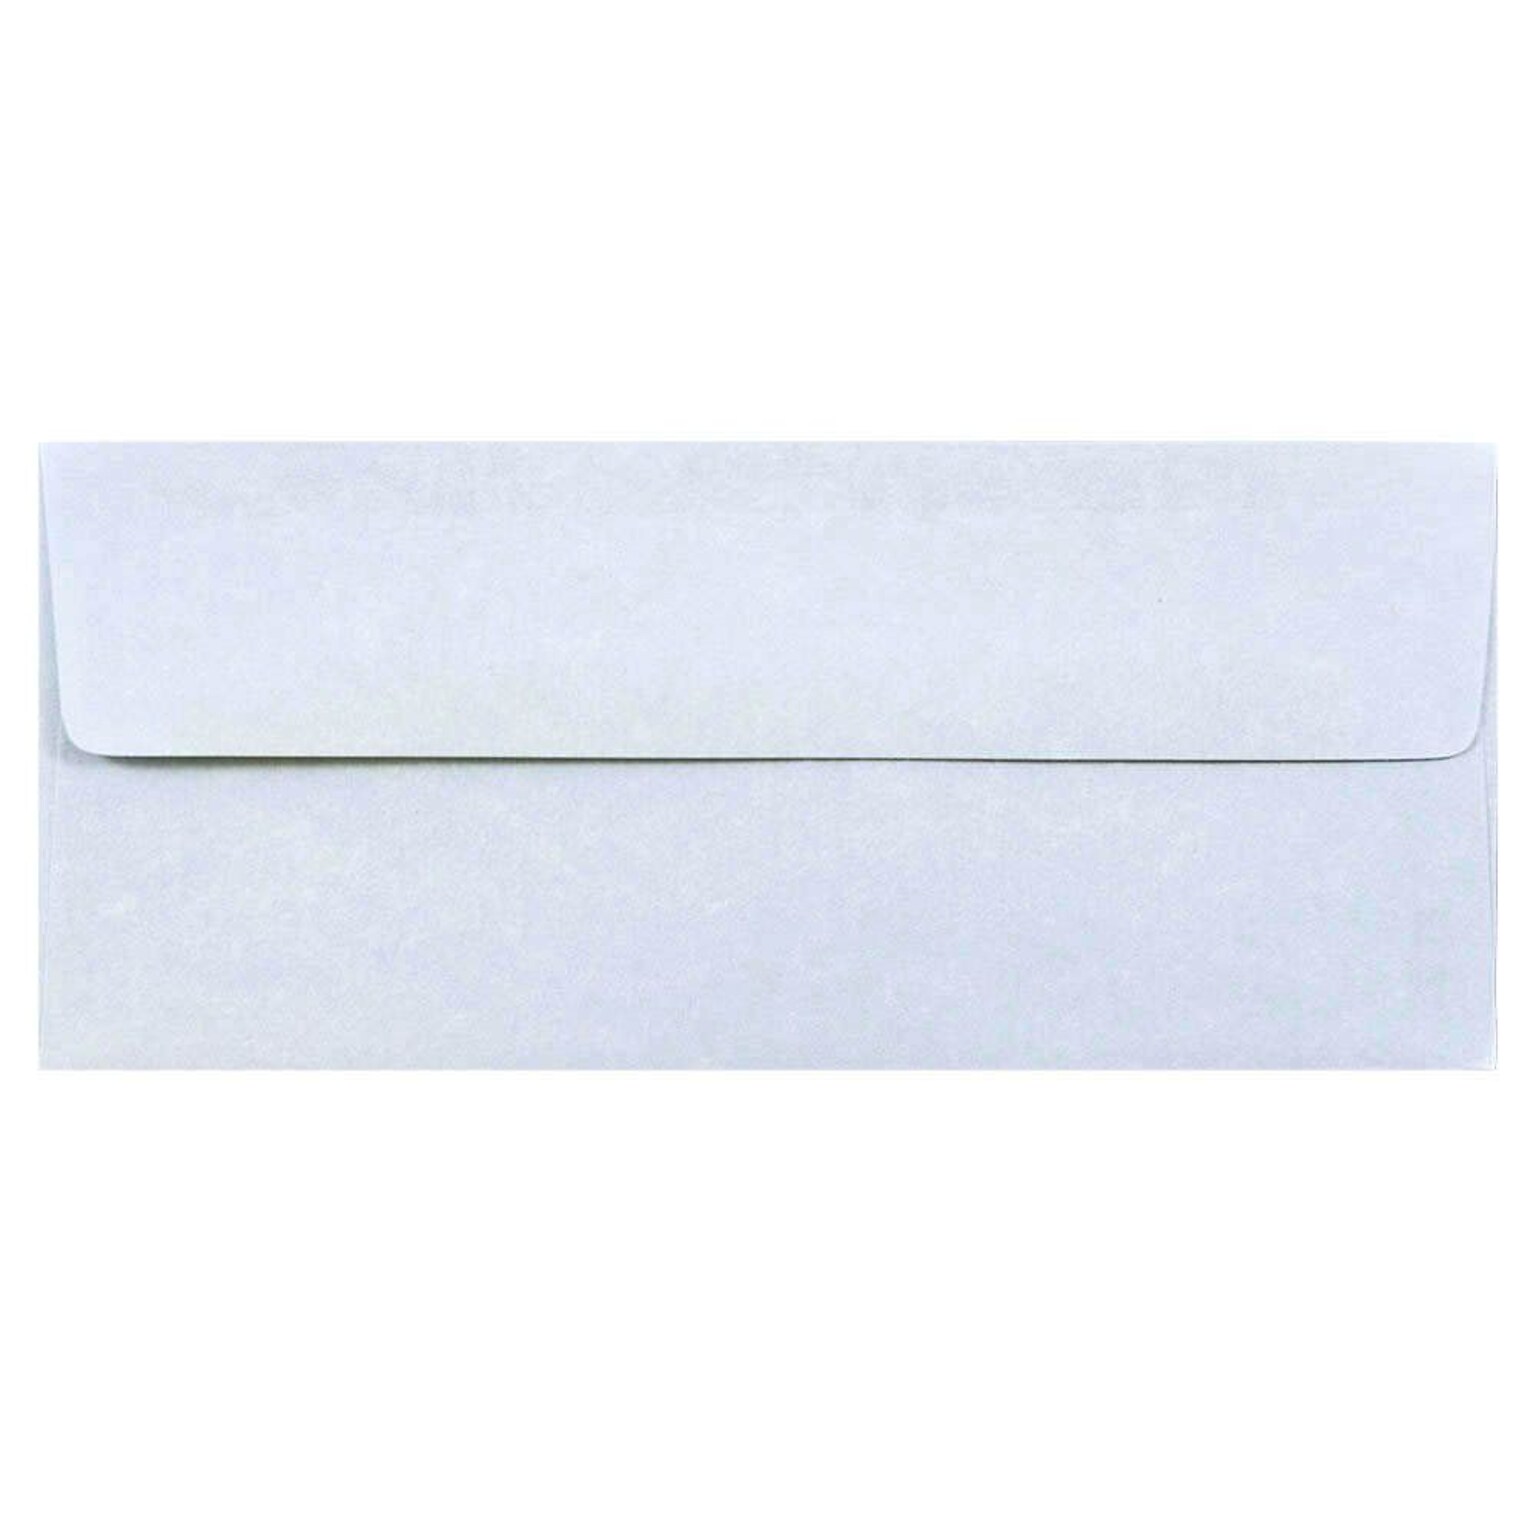 JAM Paper Open End #10 Currency Envelope, 4 1/8 x 9 1/2, Blue Parchment, 500/Pack (900908732H)